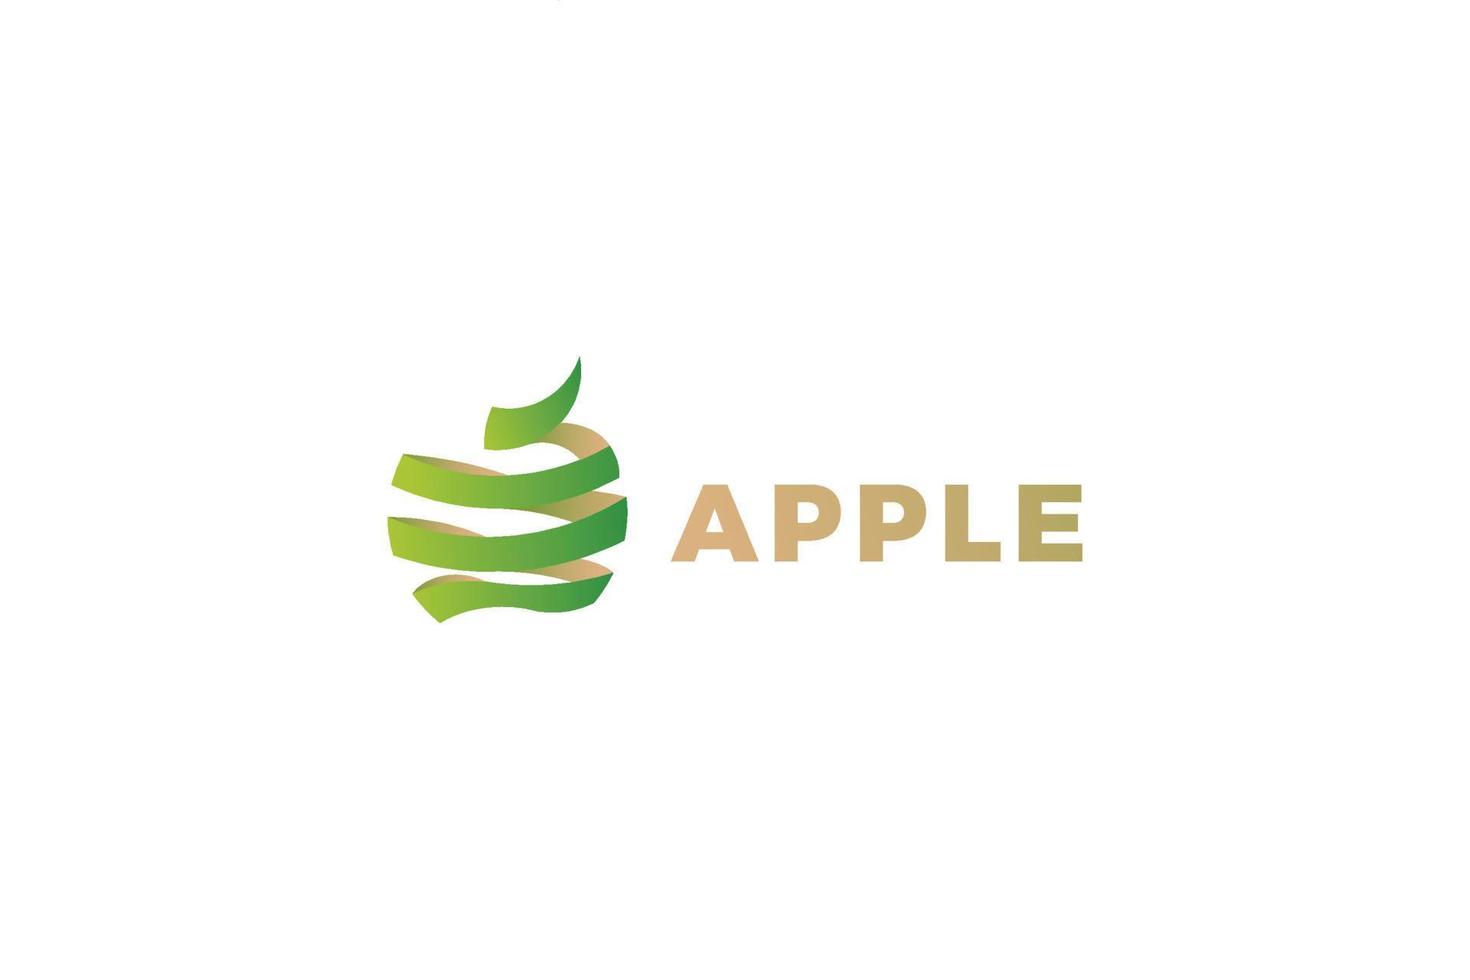 groen appel lint logo vector